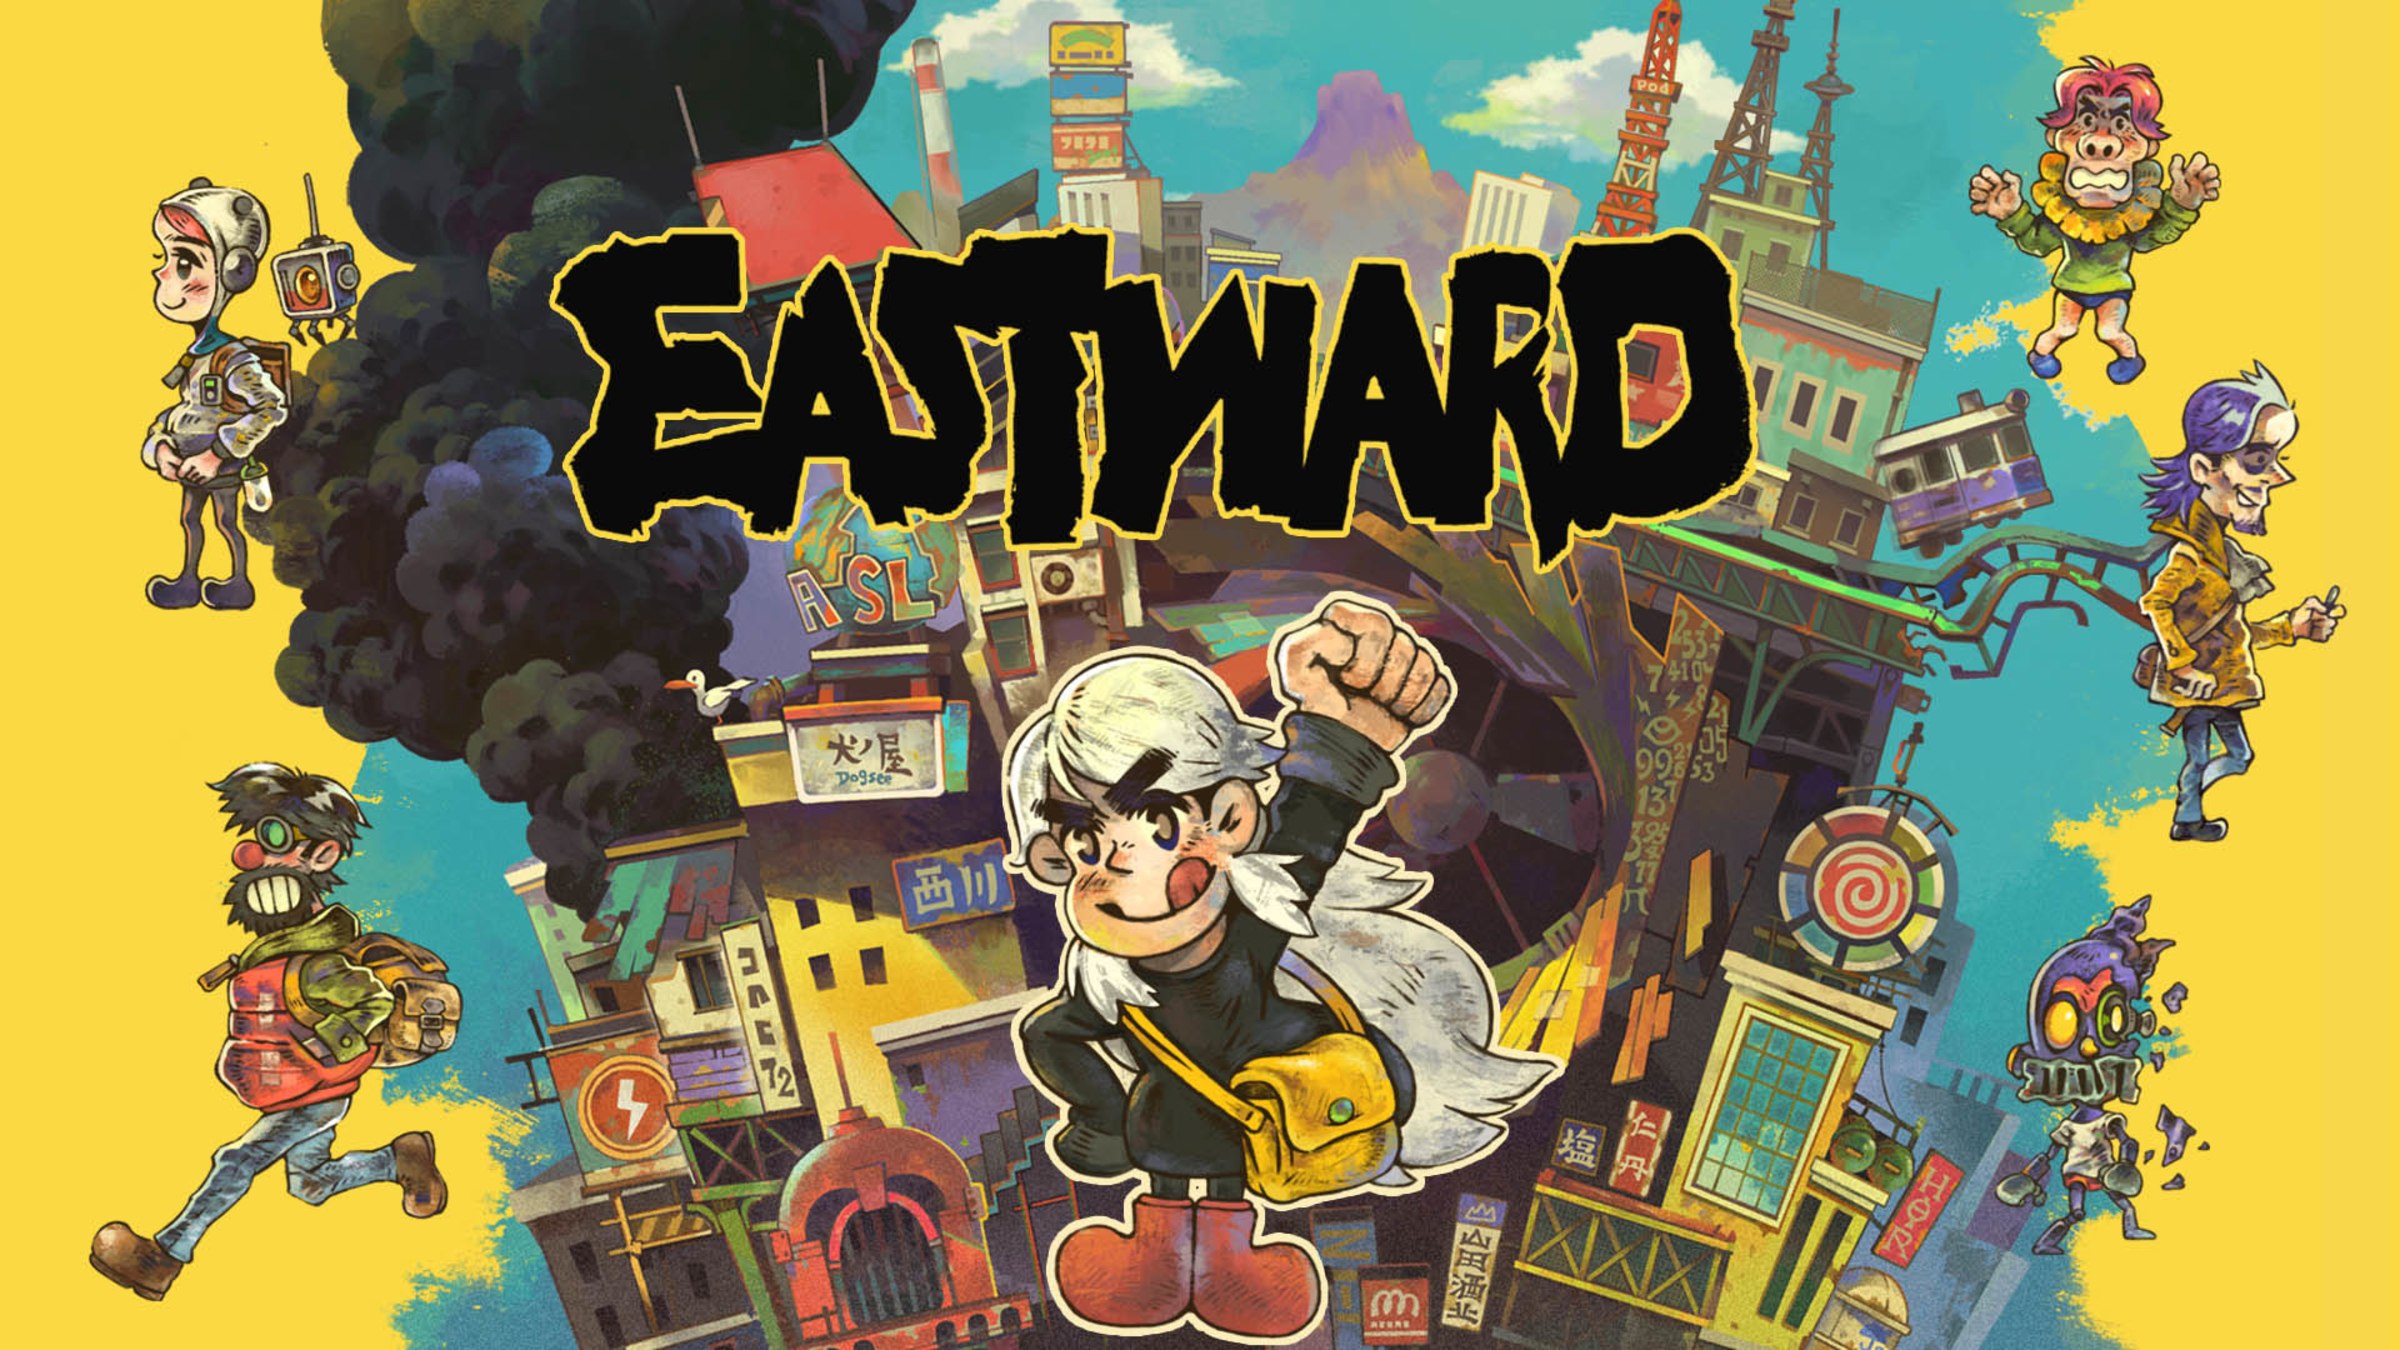 Eastward( Buy ) - Switch ( [ Permanently Sealed Bonus )